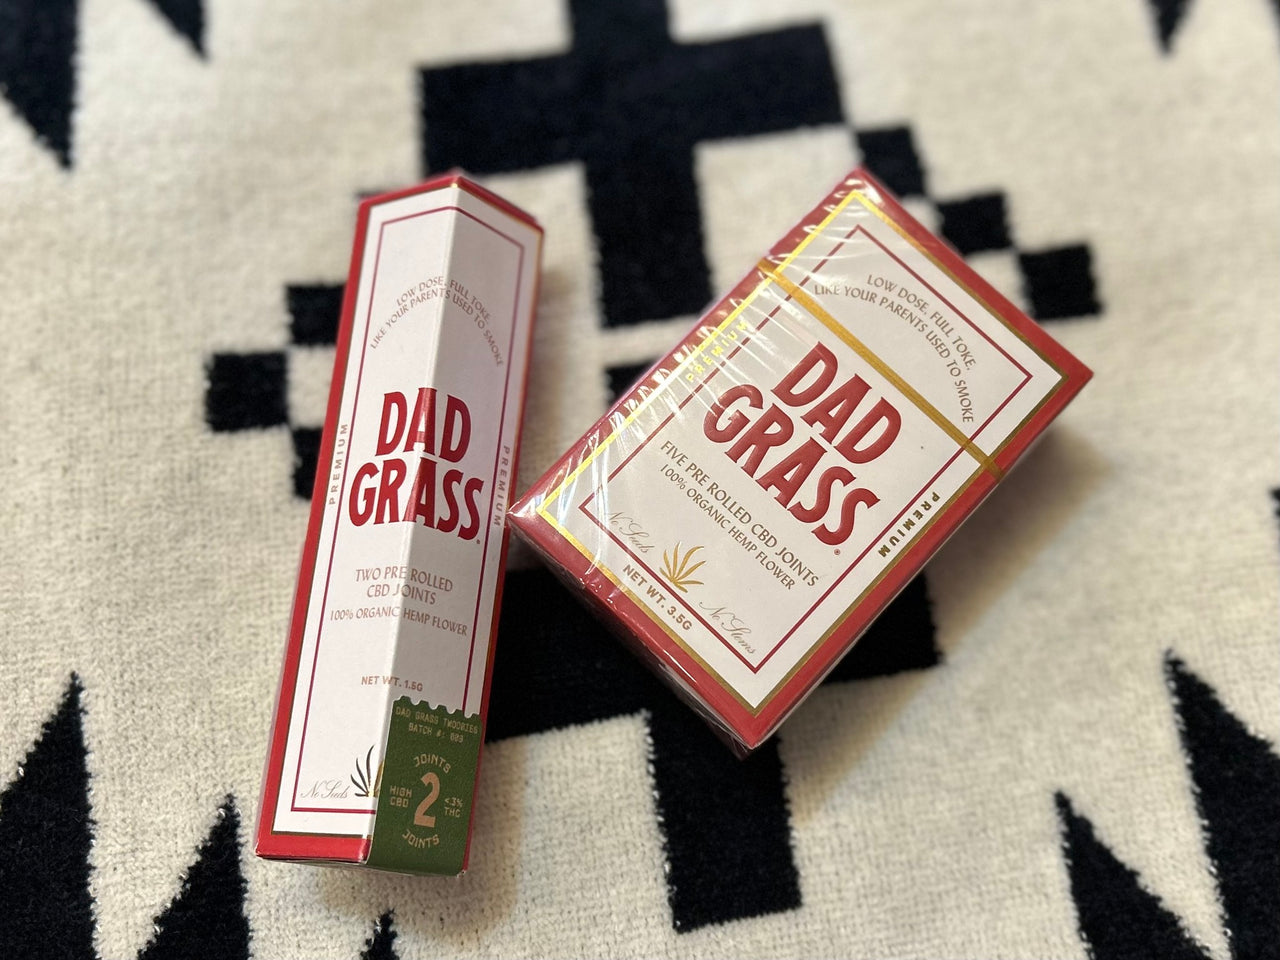 Dad Grass | The Five Pack Hemp CBD Preroll